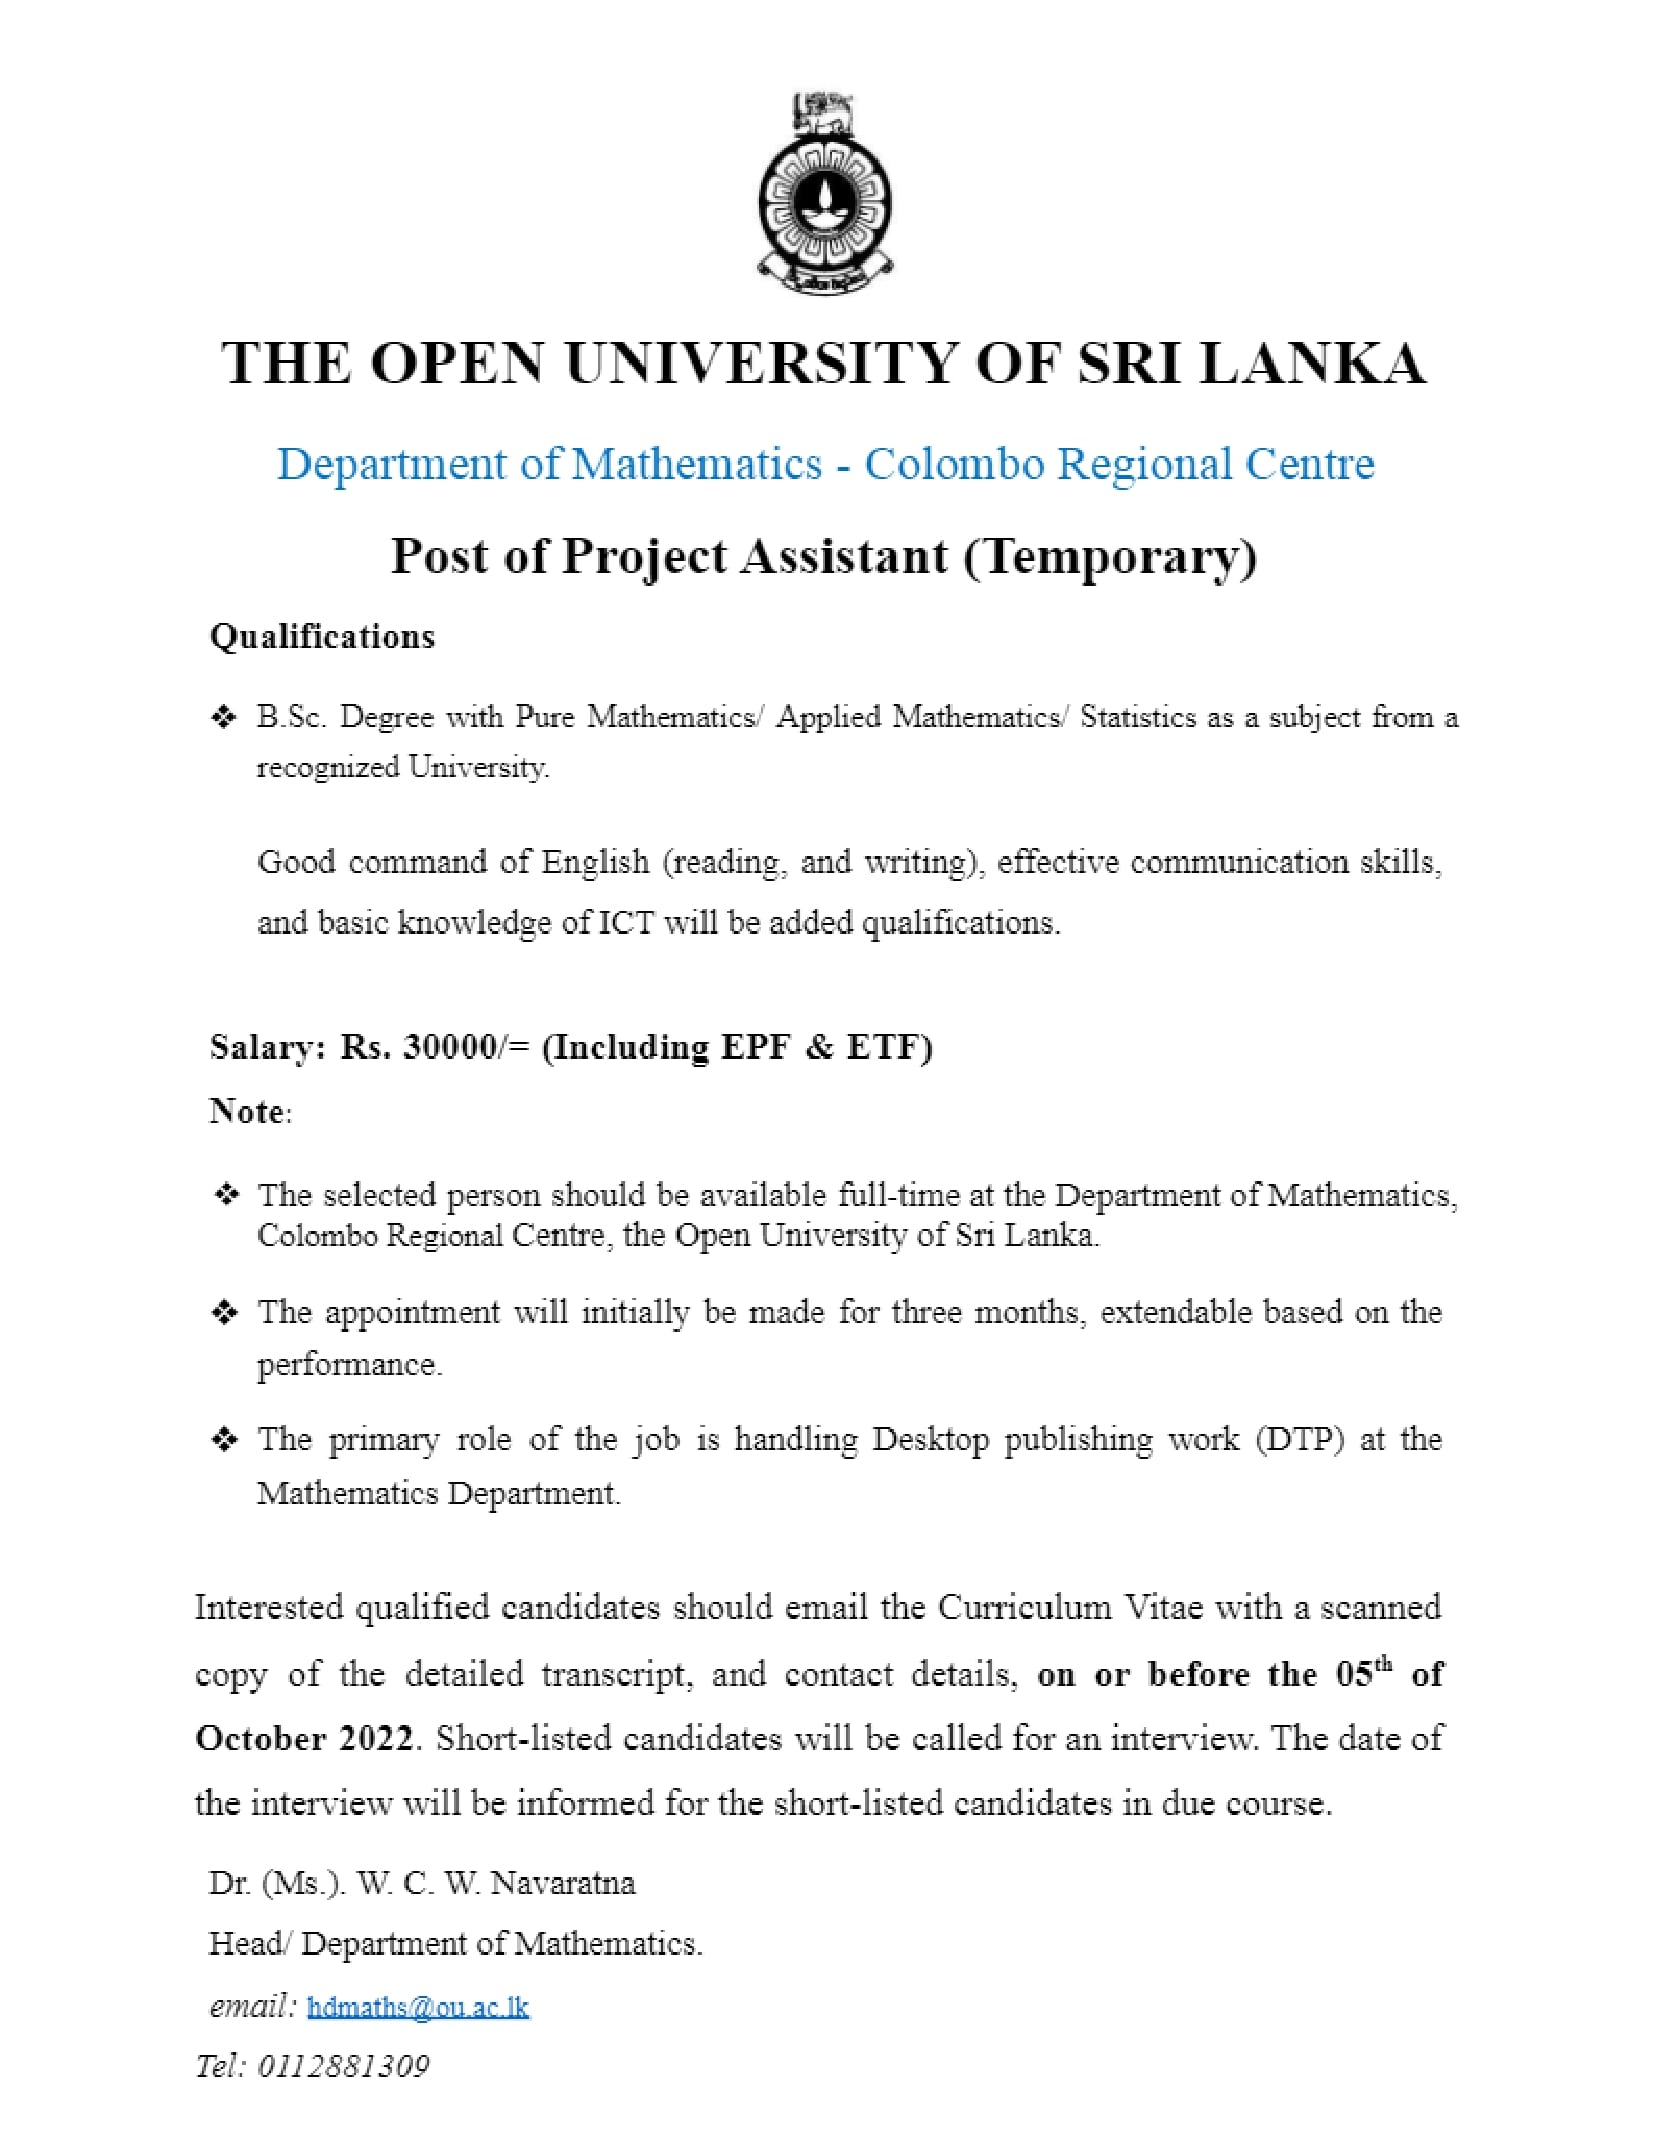 Project Assistant Vacancies in OUSL Department of Mathematics Open University